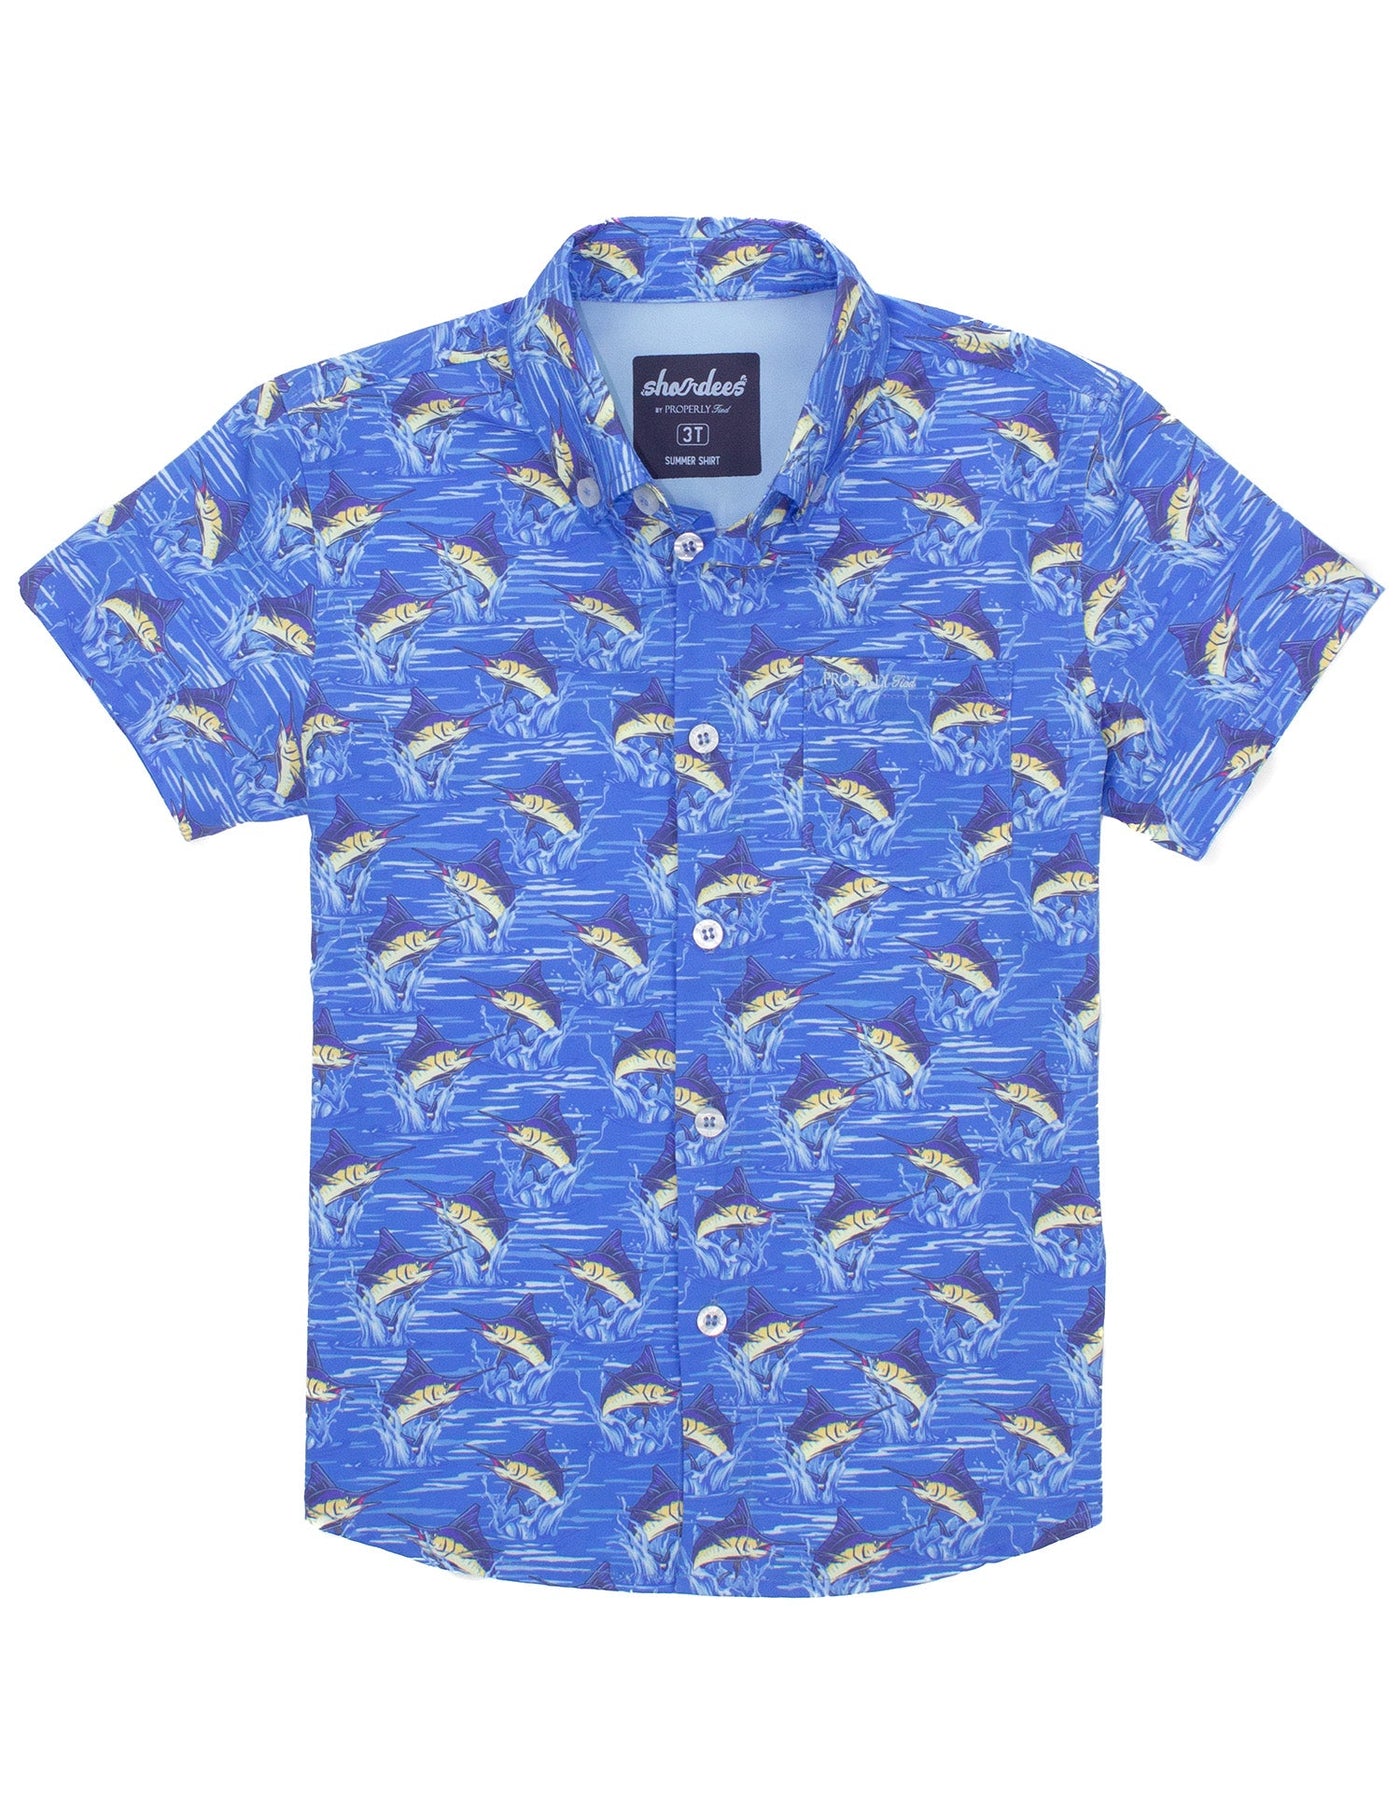 LD Shordees Summer Shirt Marlin